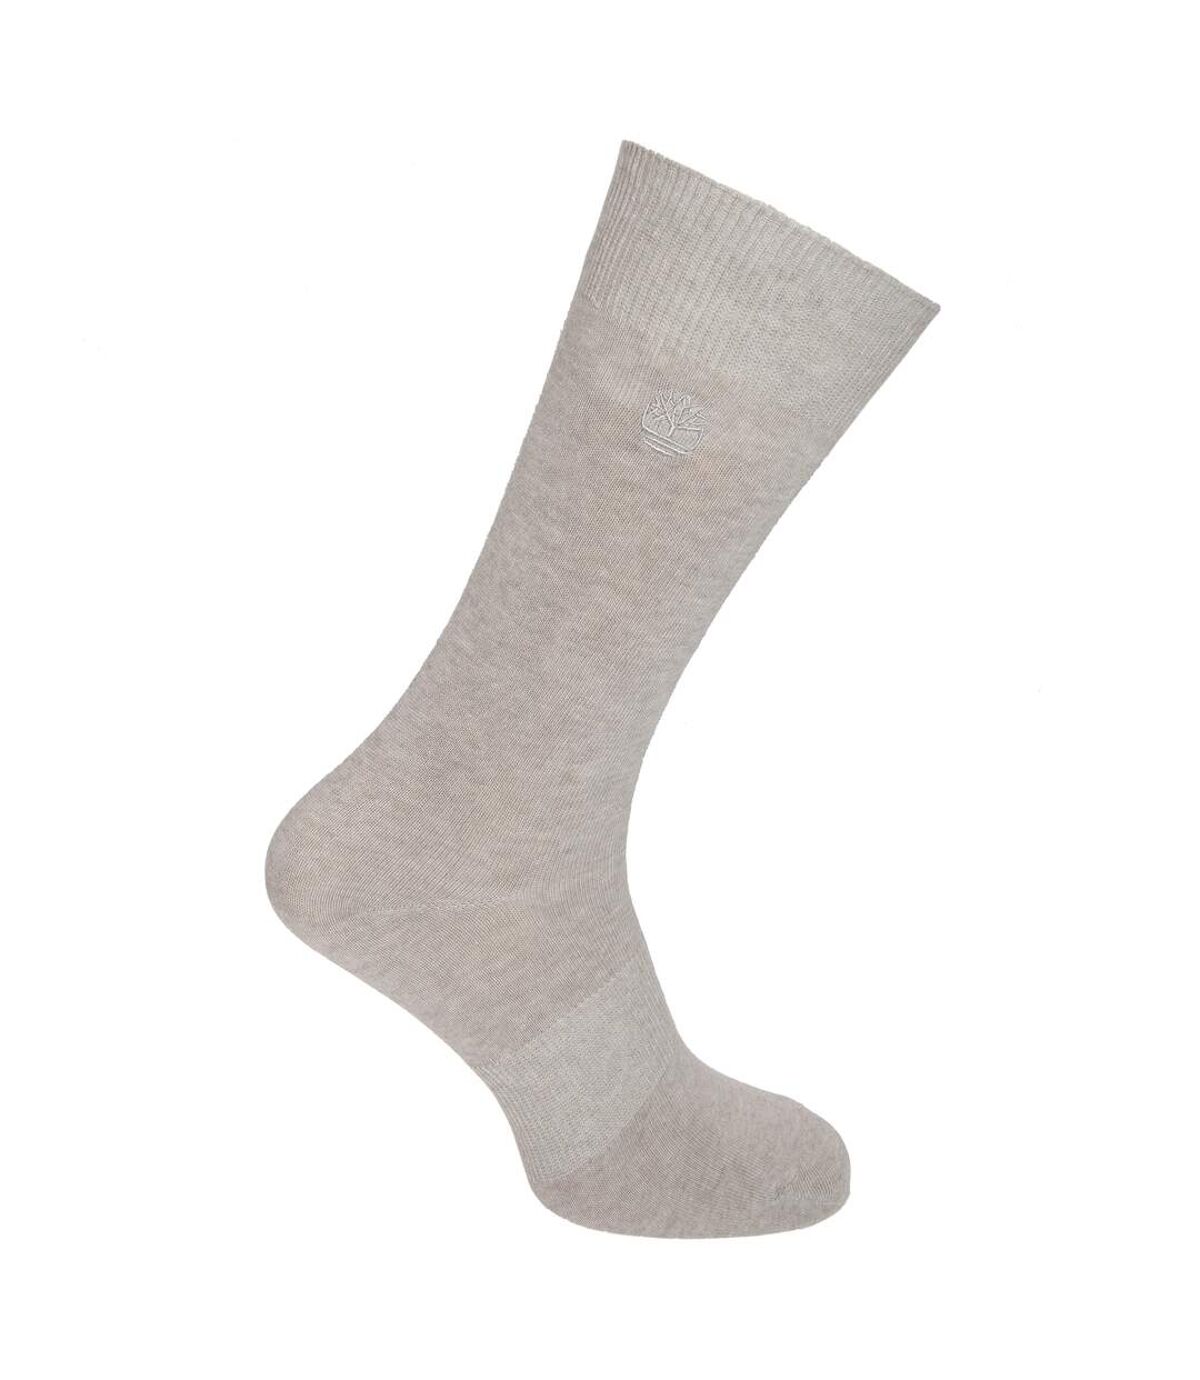 Timberland Mens Cotton Flat Knit Long Socks (Khaki) - UTUT433